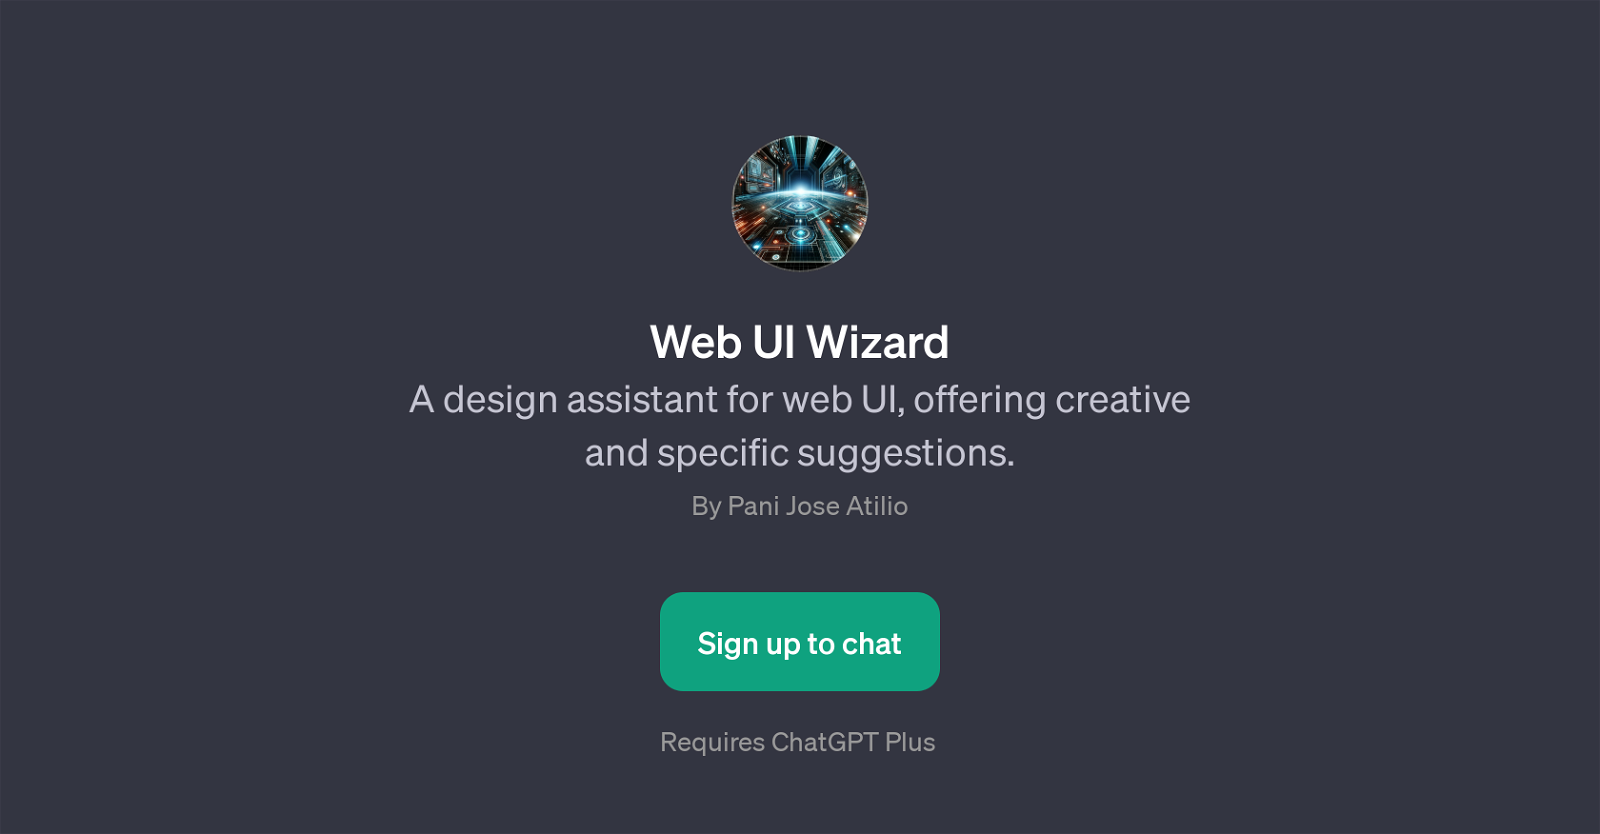 Web UI Wizard website